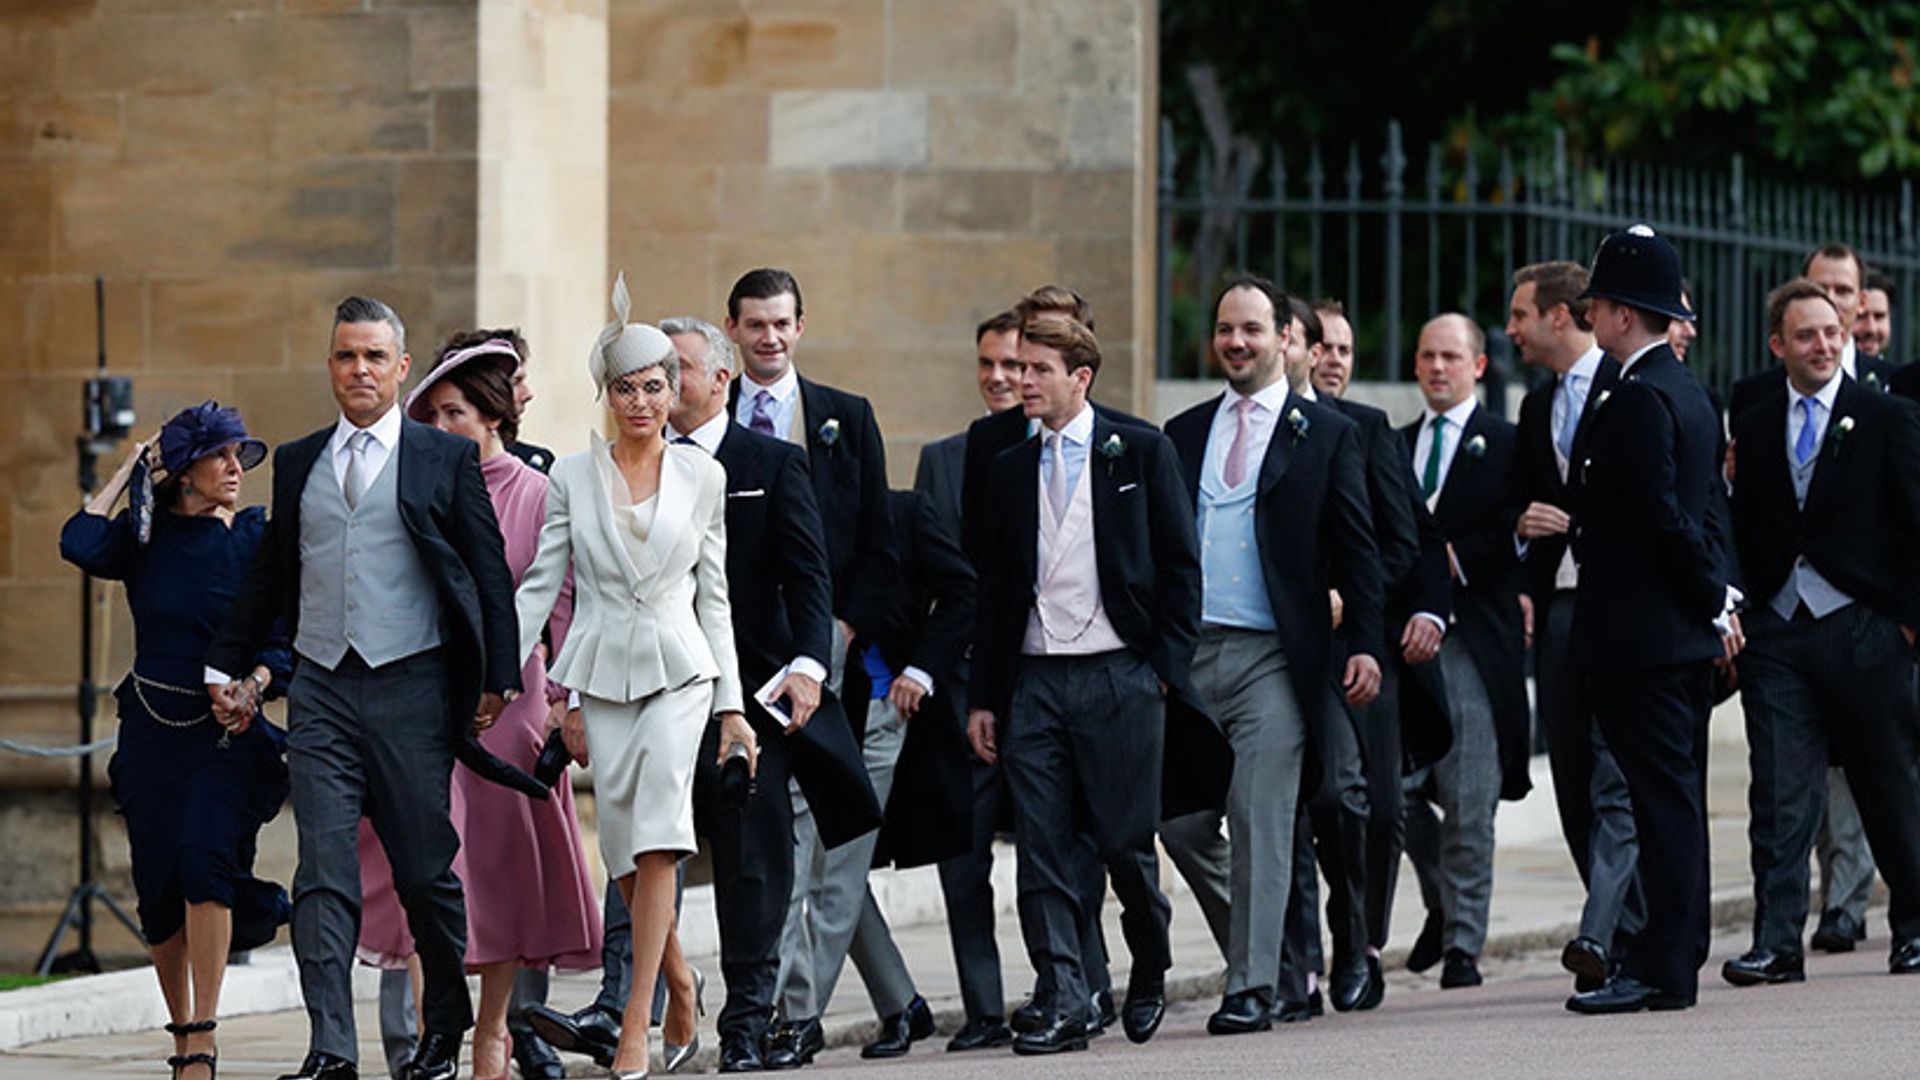 royal wedding guests arrive